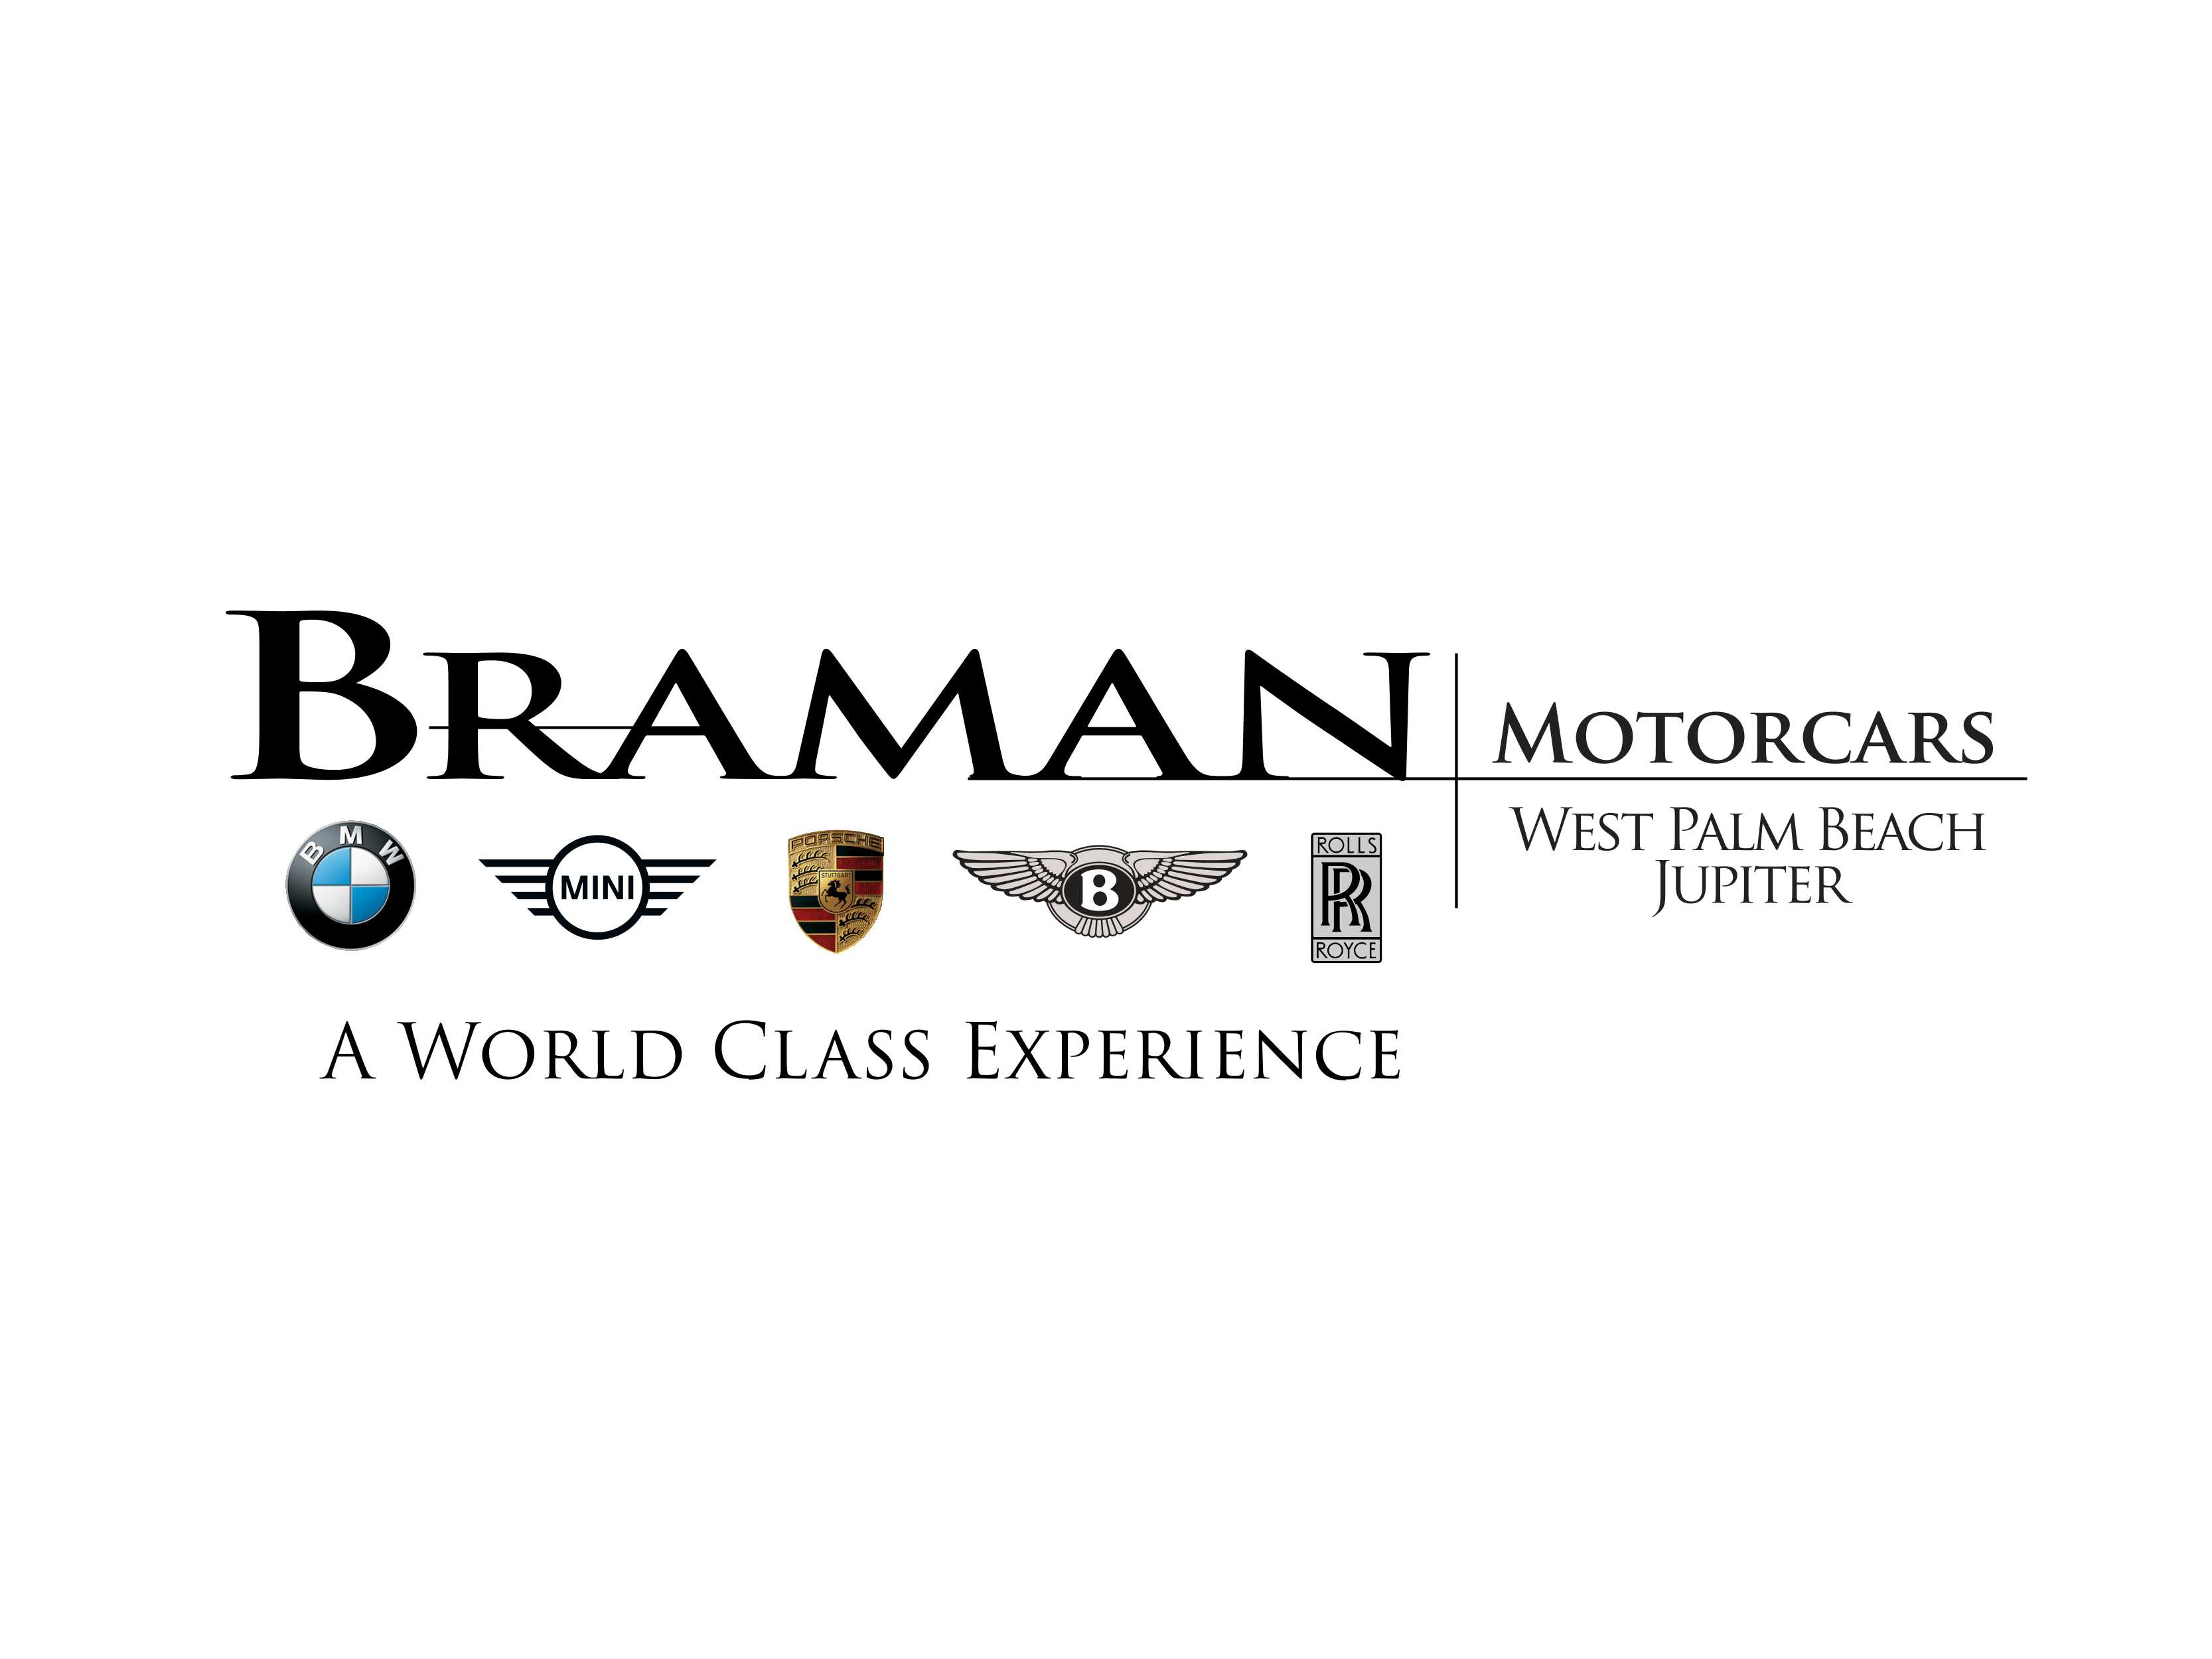 Braman Motorcars